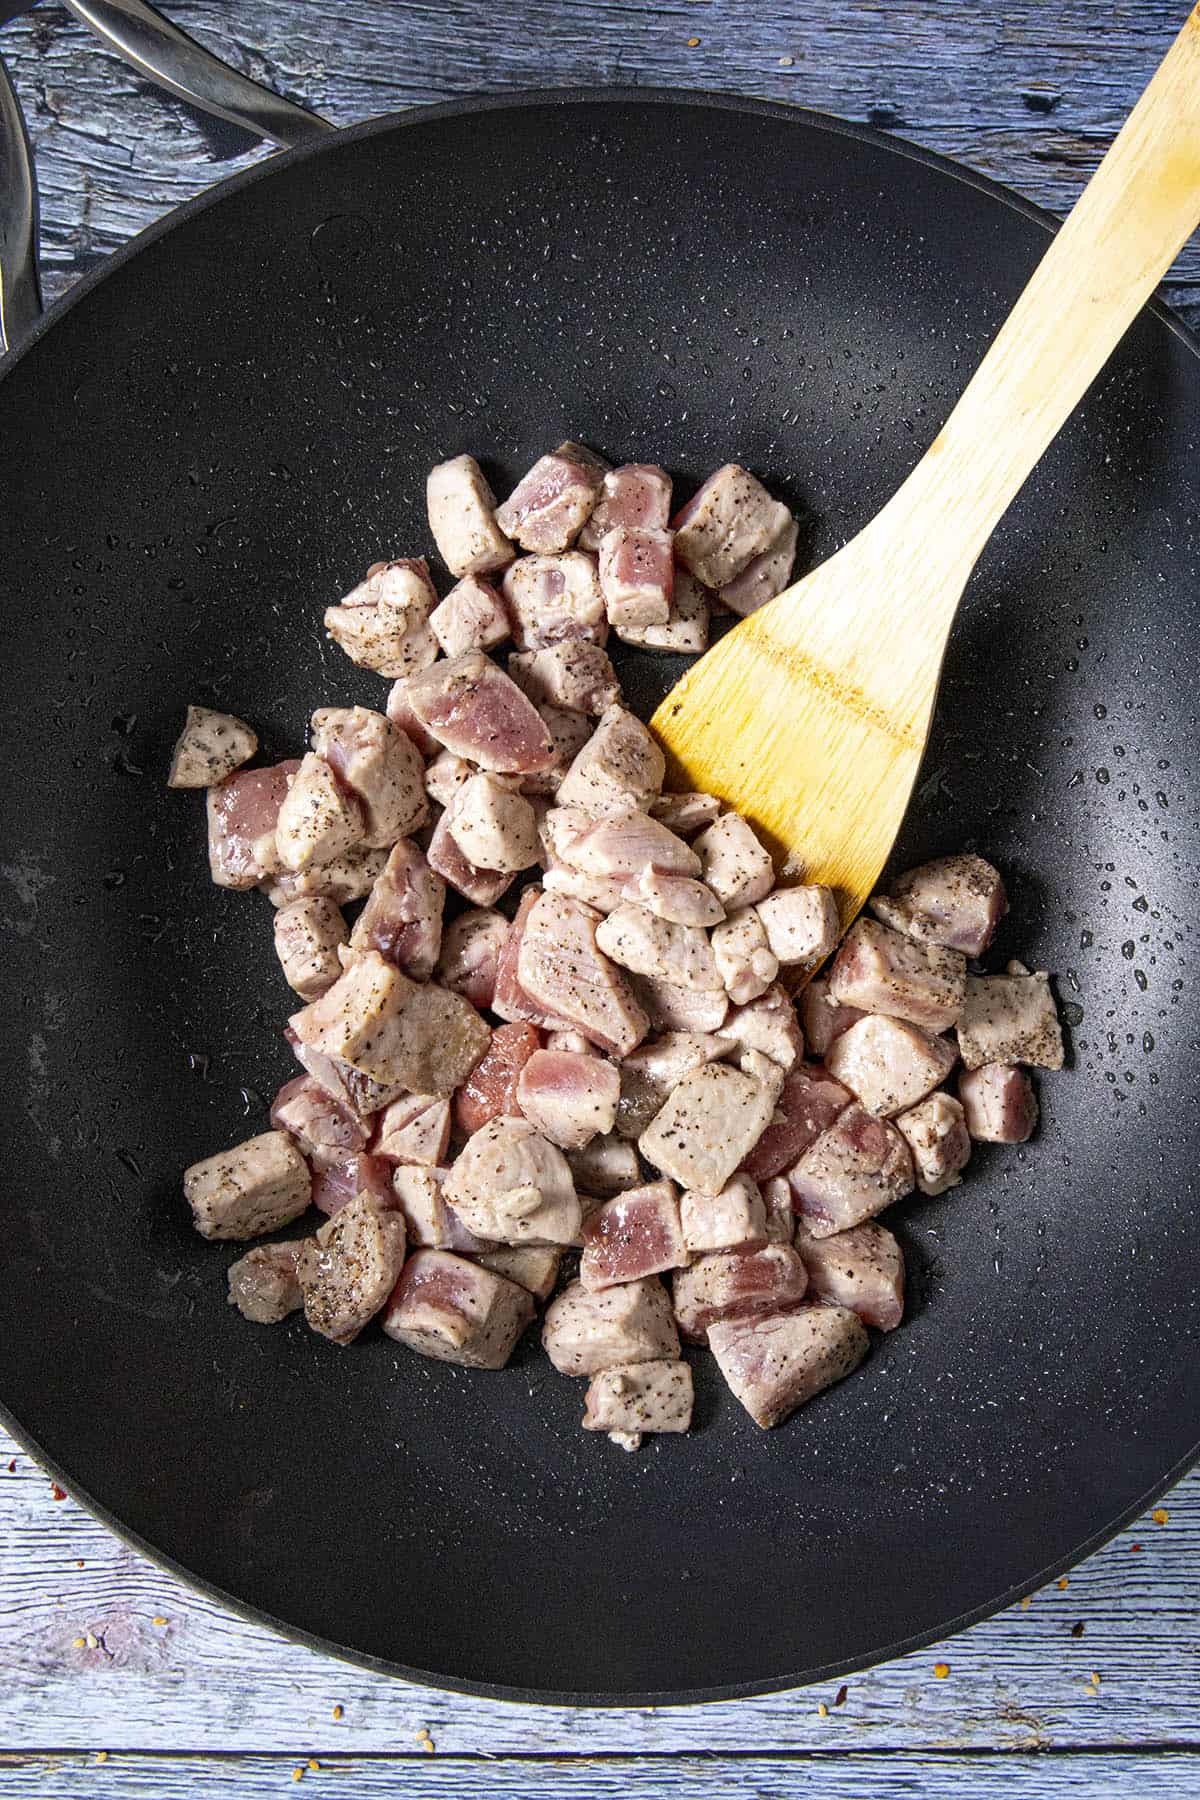 Cooking chunks of pork tenderloin in a pan to make Pork Stir Fry